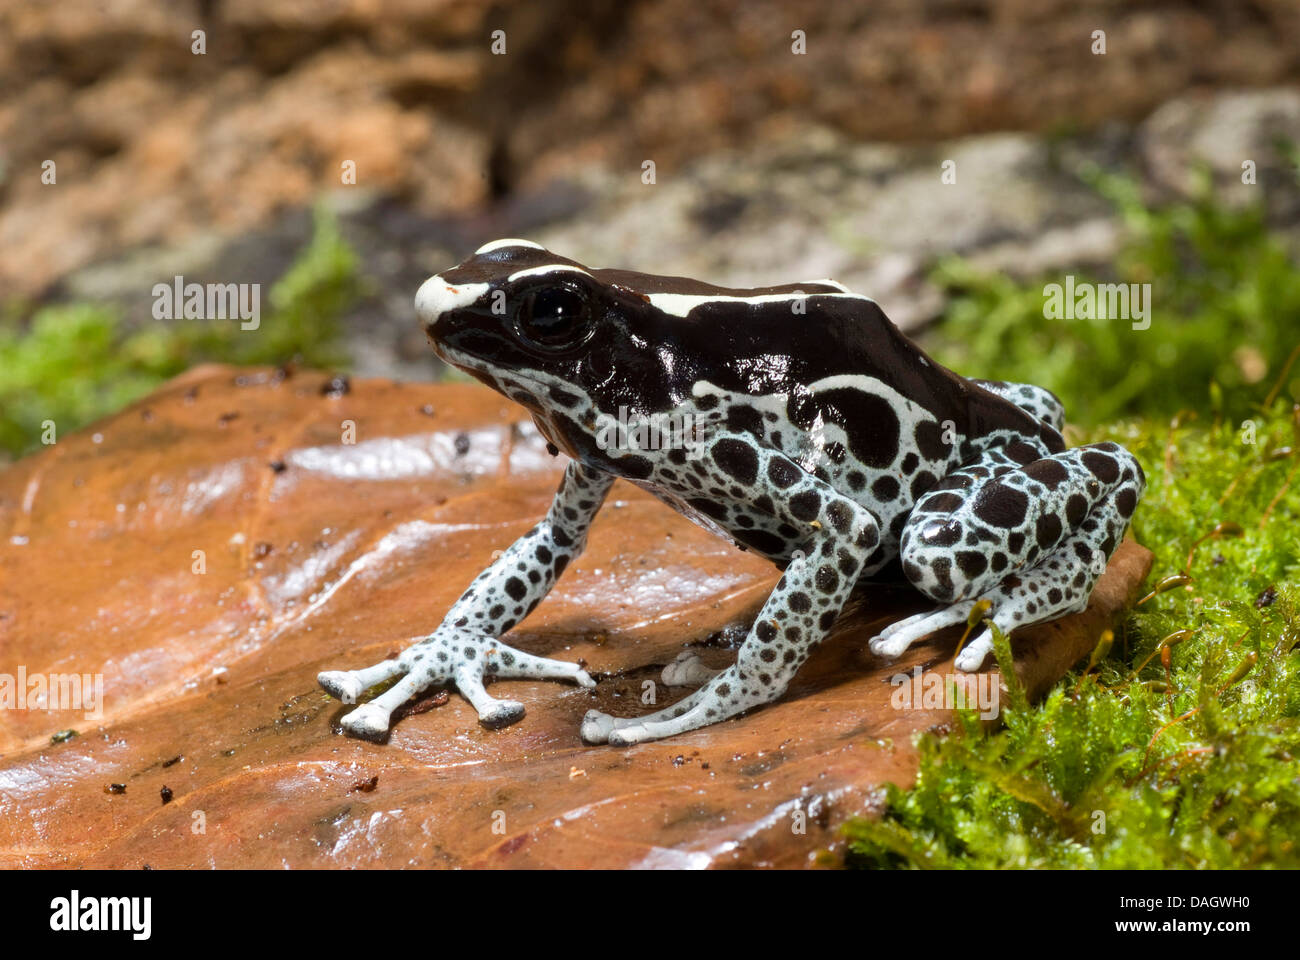 dyeing poison-arrow frog, Dyeing poison frog (Dendrobates tinctorius), black-spotted grey morph sitting on a leaf on the ground Stock Photo